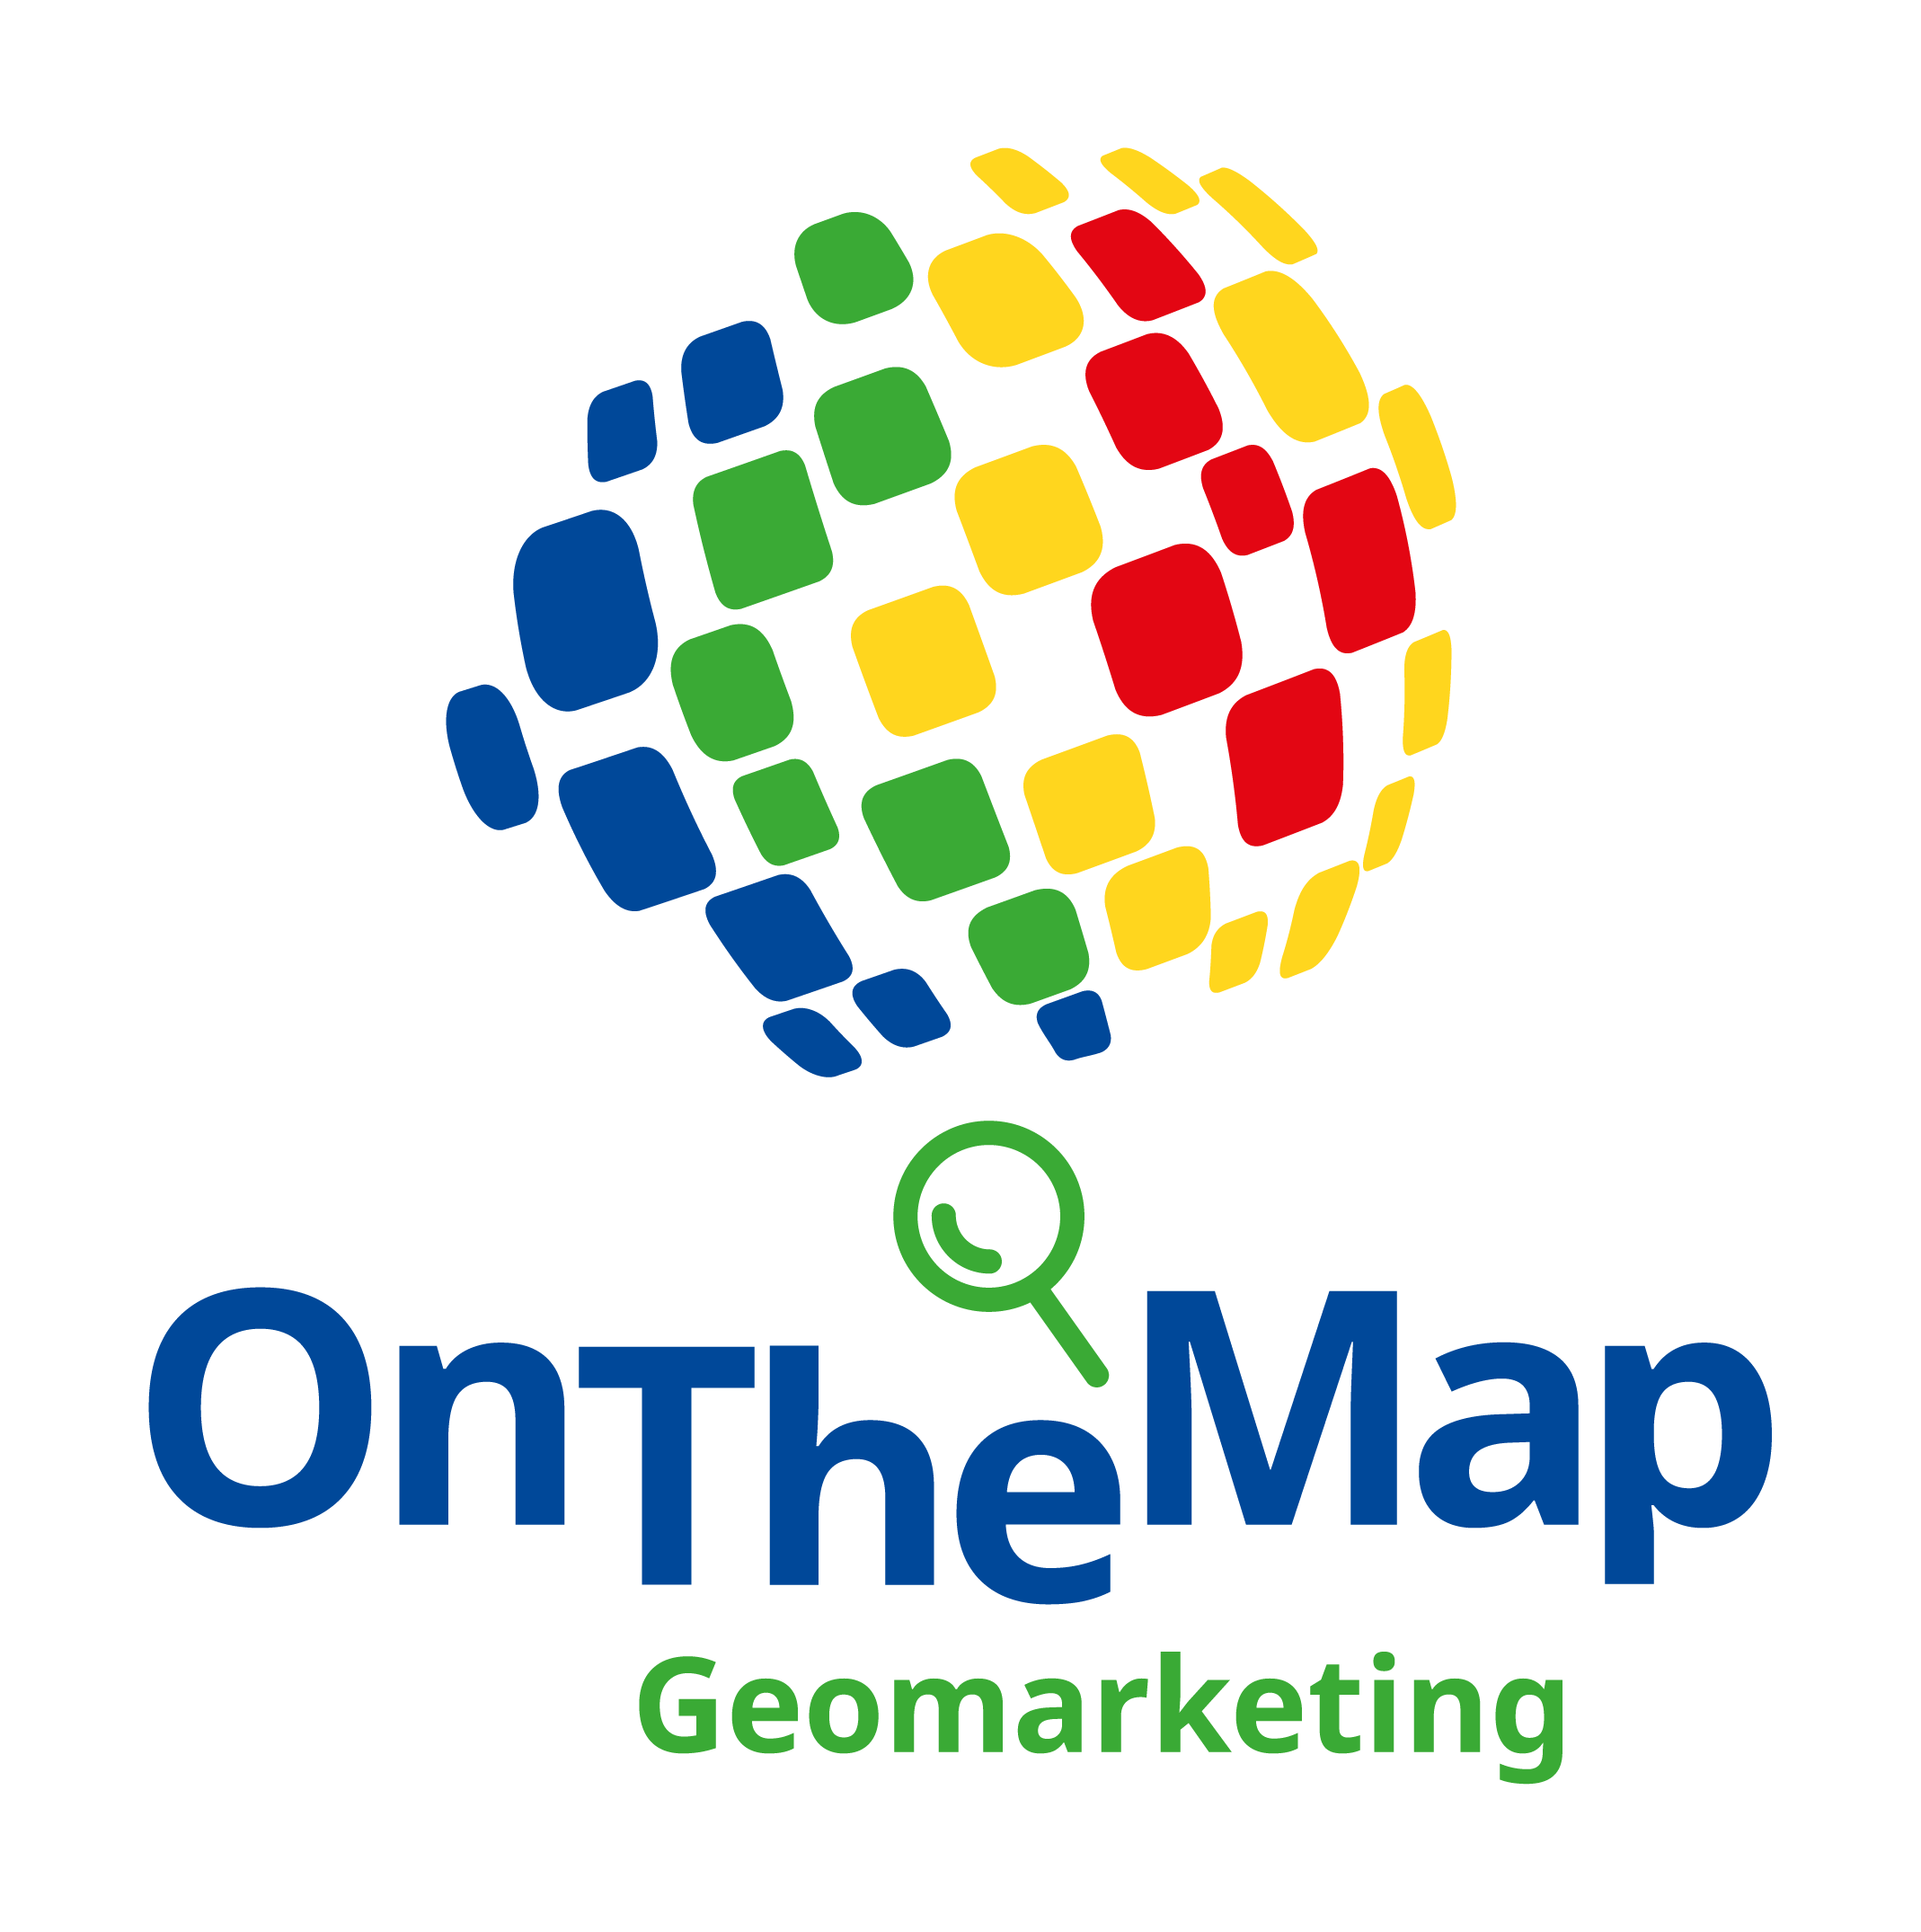 OnTheMap Geomarketing